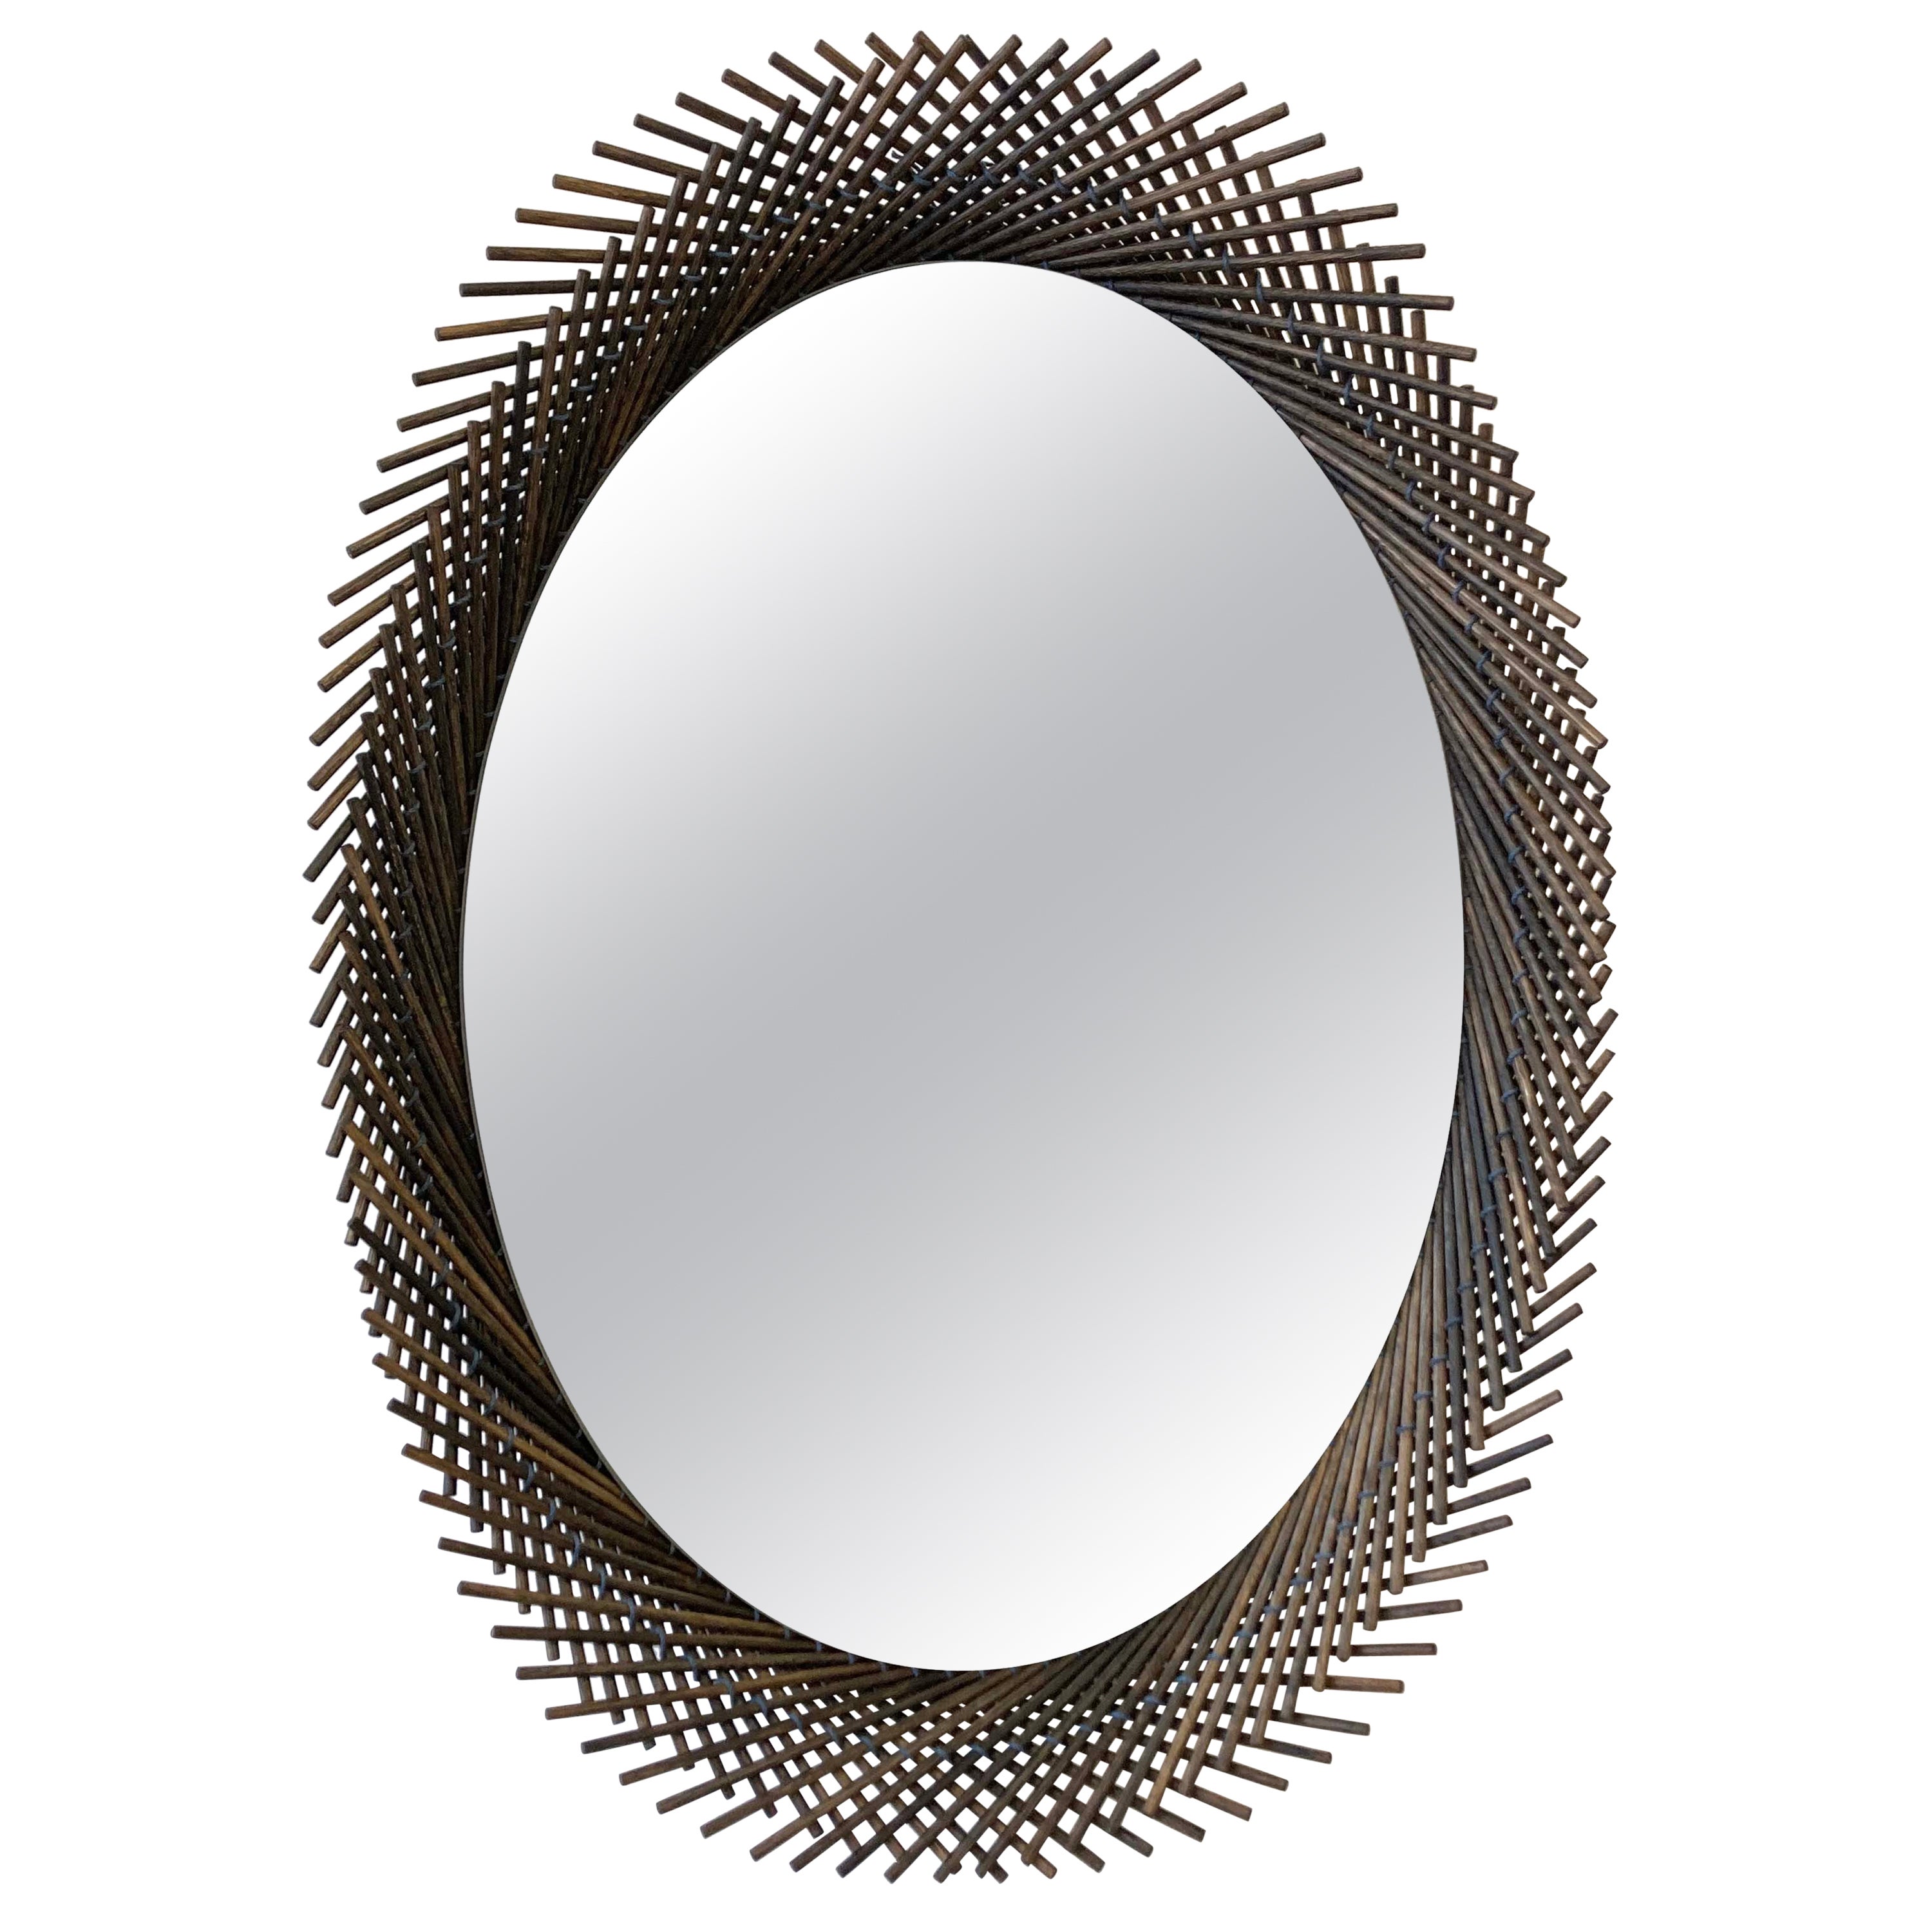 Mooda Mirror Oval 28 / Oxidized Oak Wood, Clear Mirror by INDO- For Sale